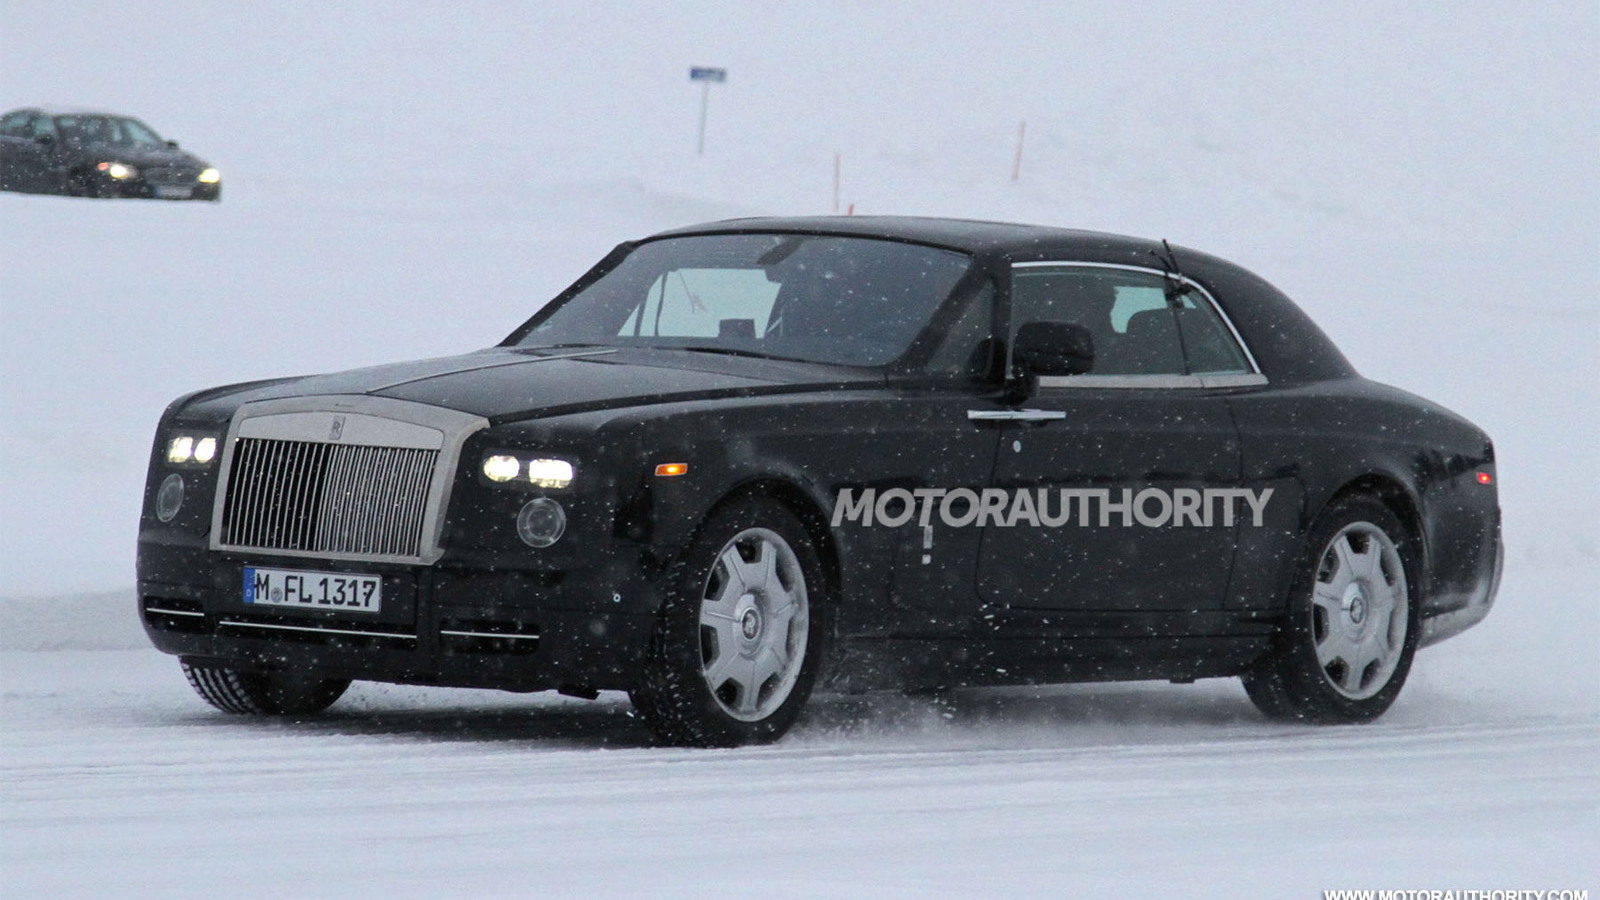 2013 Rolls-Royce Phantom Coupe facelift spy shots